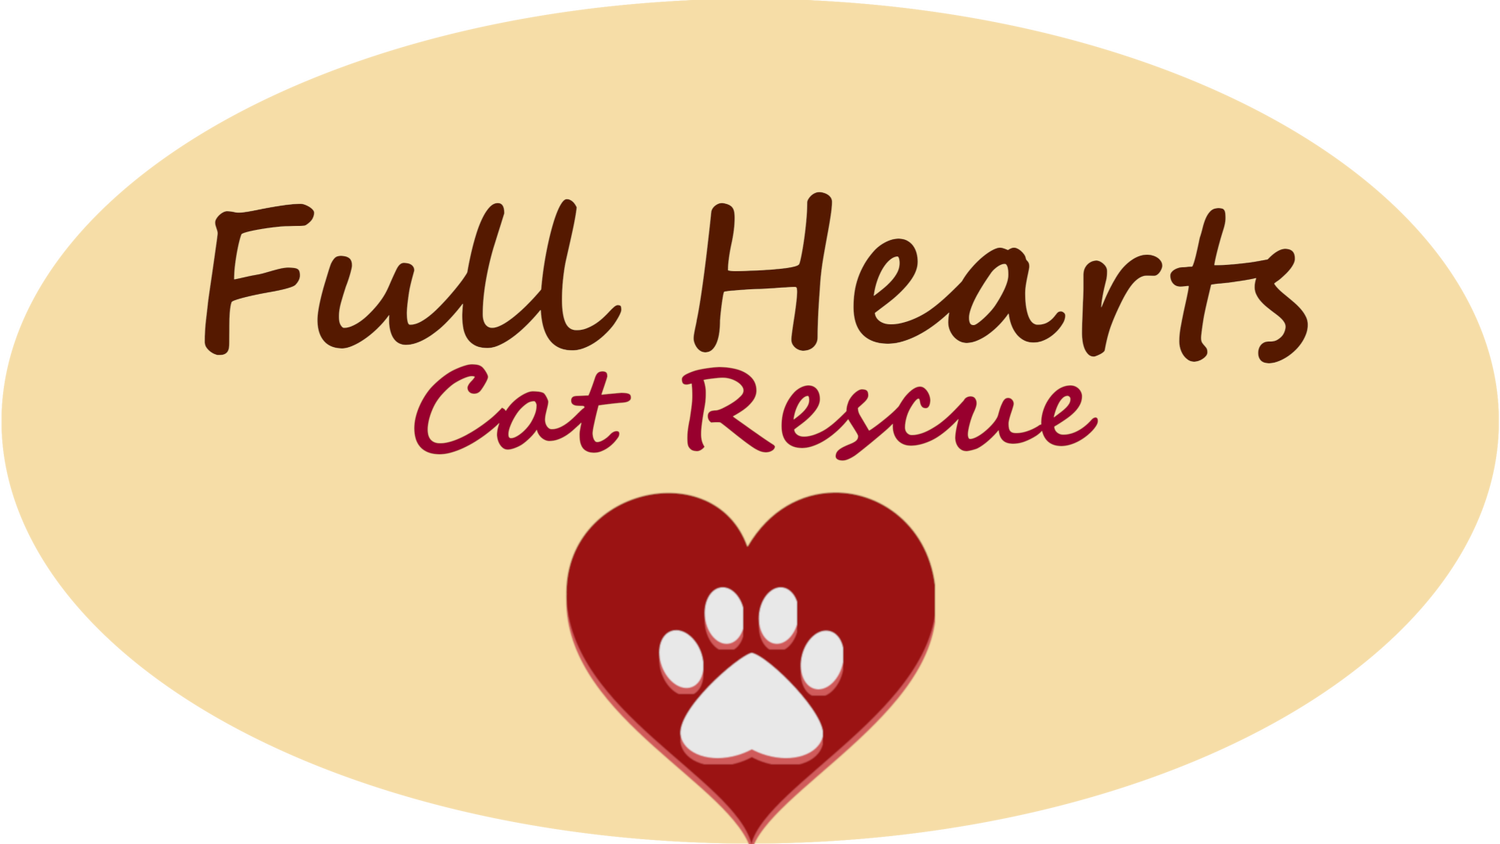 Full Hearts Cat Rescue ❤❤❤